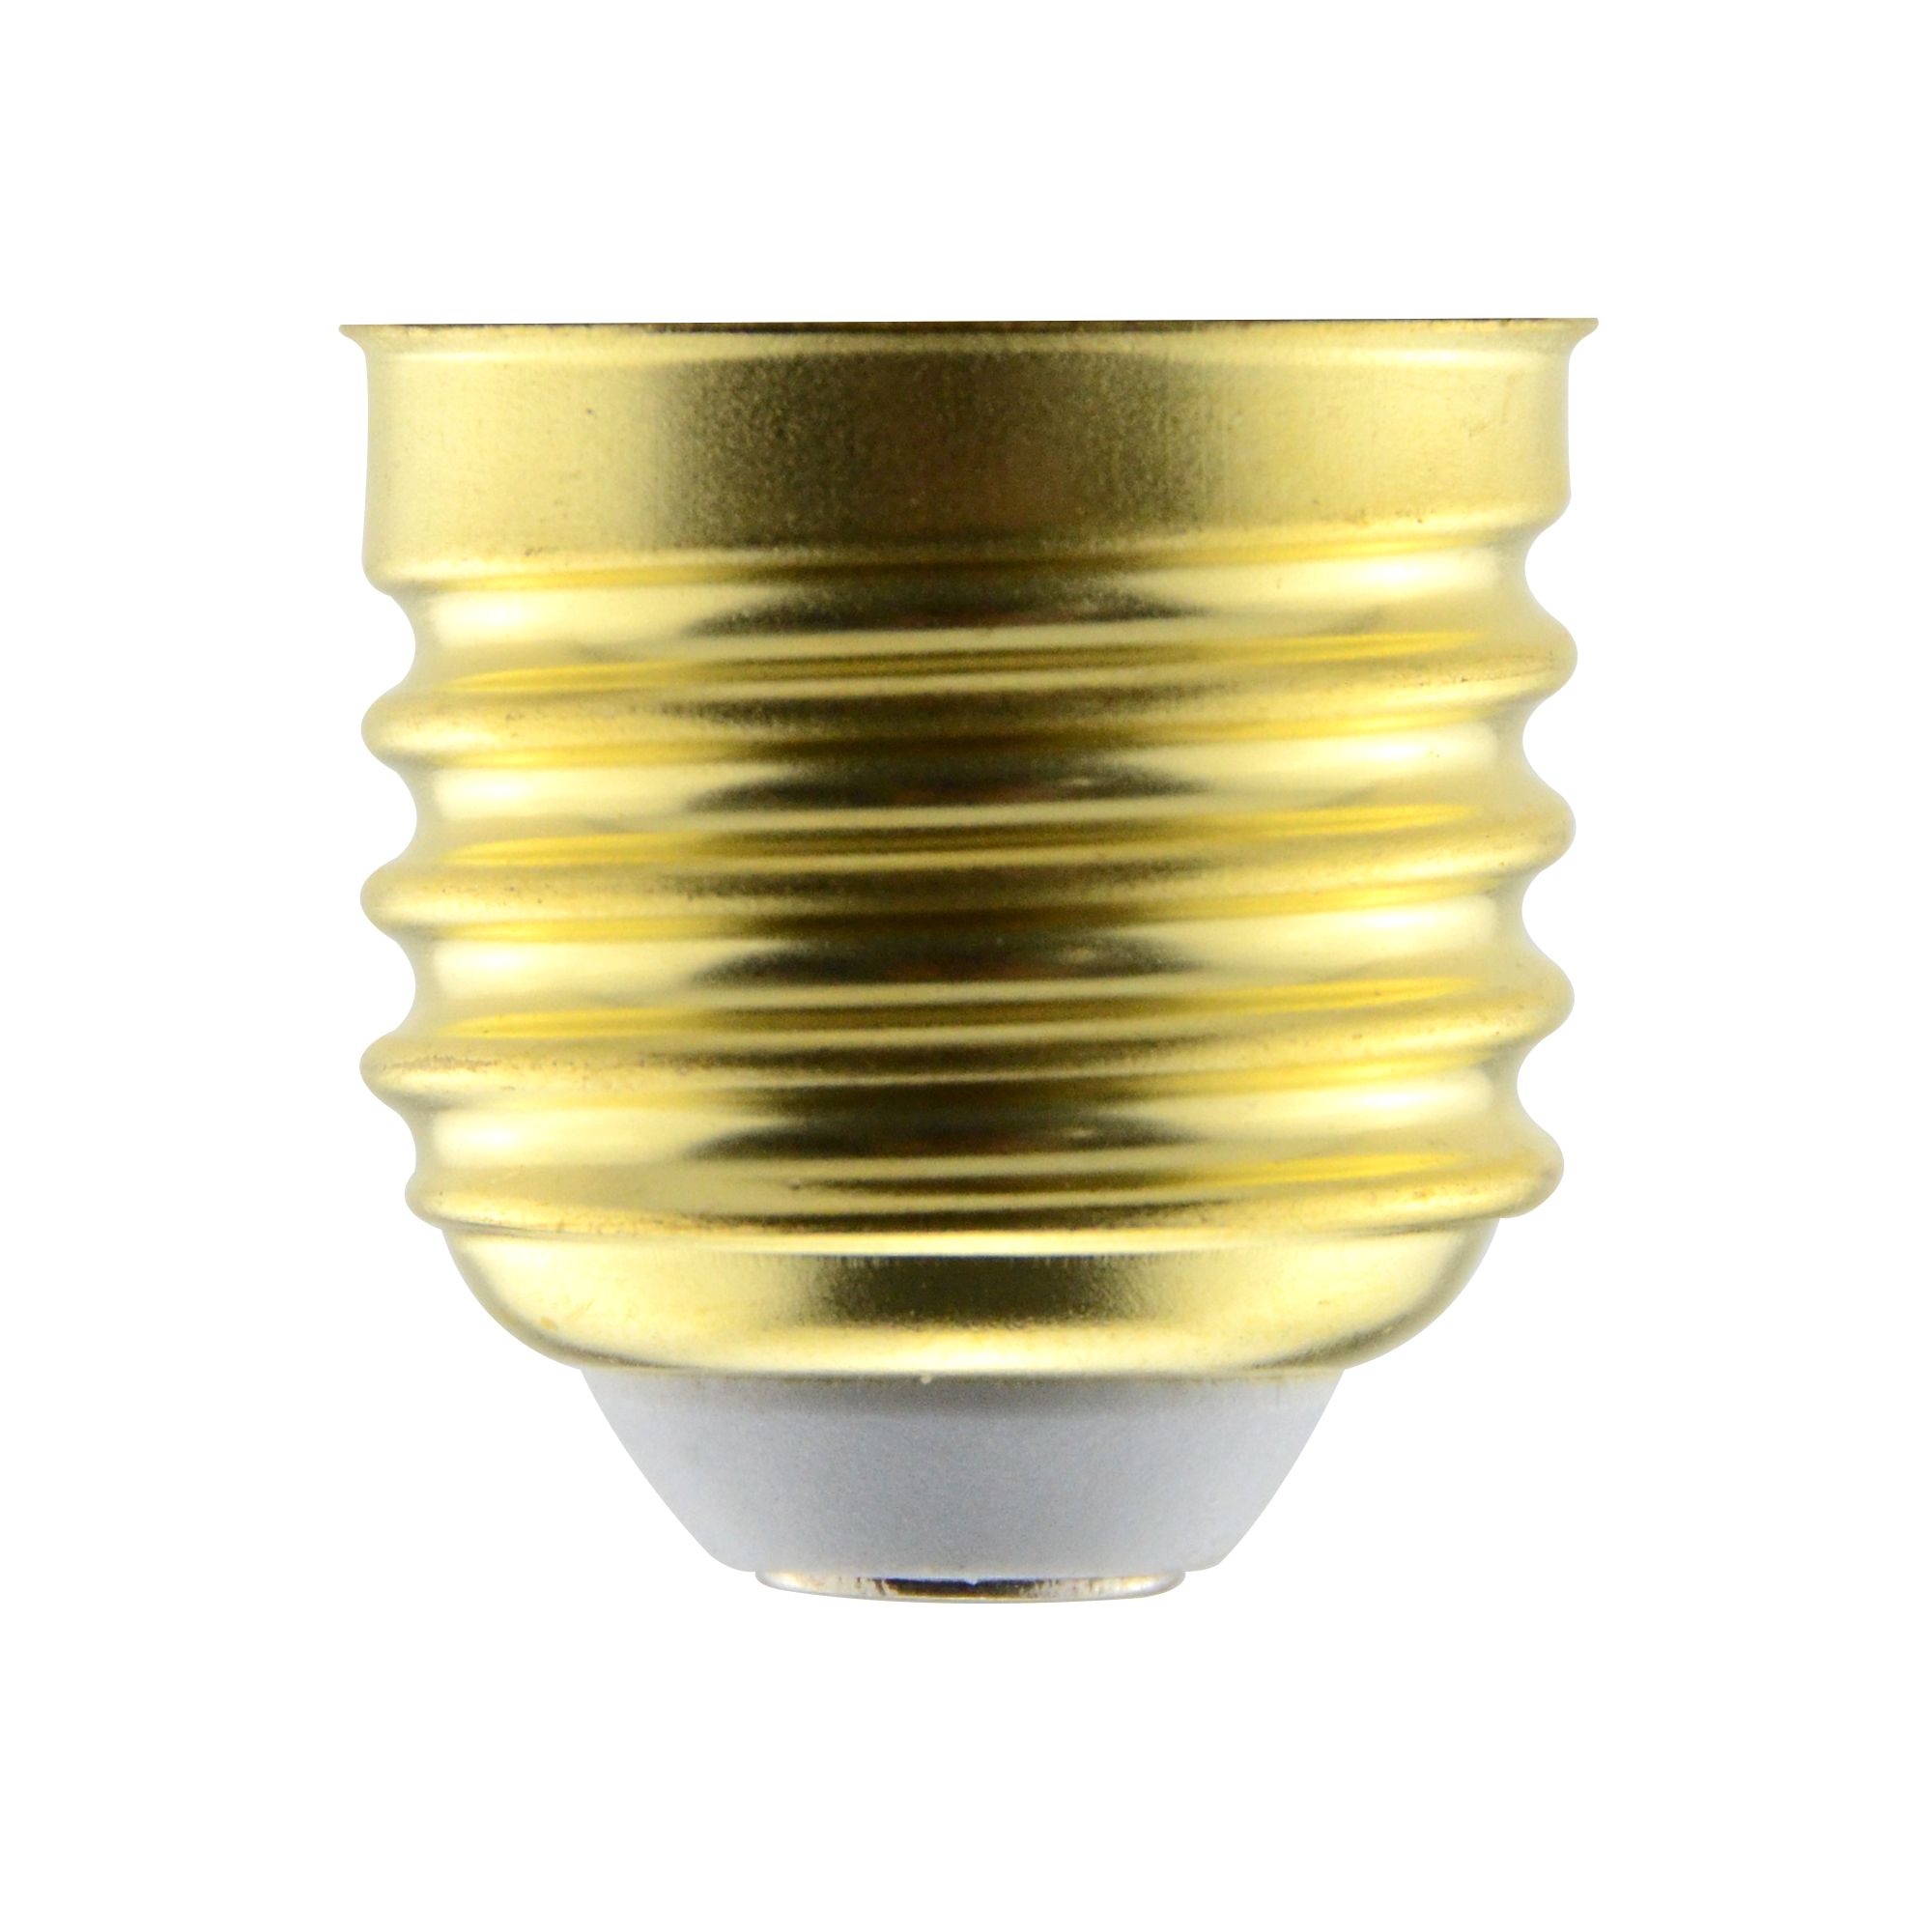 Diall E27 8.5W 806lm Amber ST64 Warm white LED Filament Light bulb